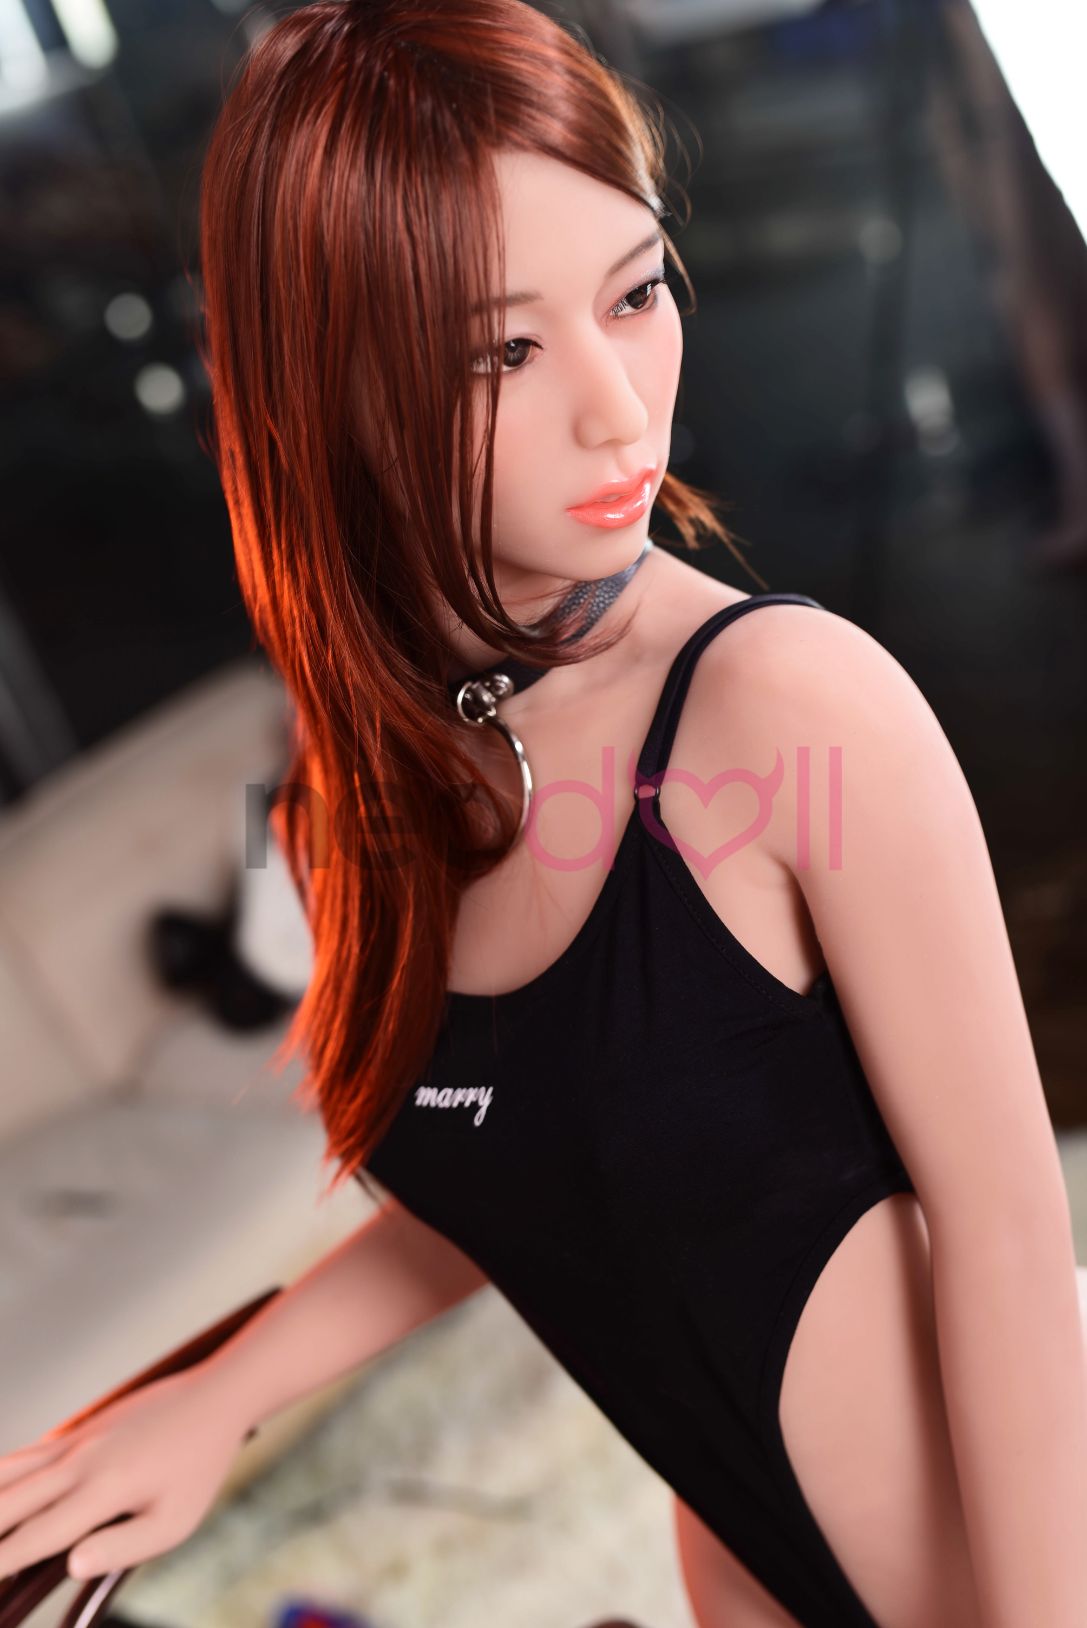 Neodoll Allure Lydia - Realistic Sex Doll - 158cm - Tan